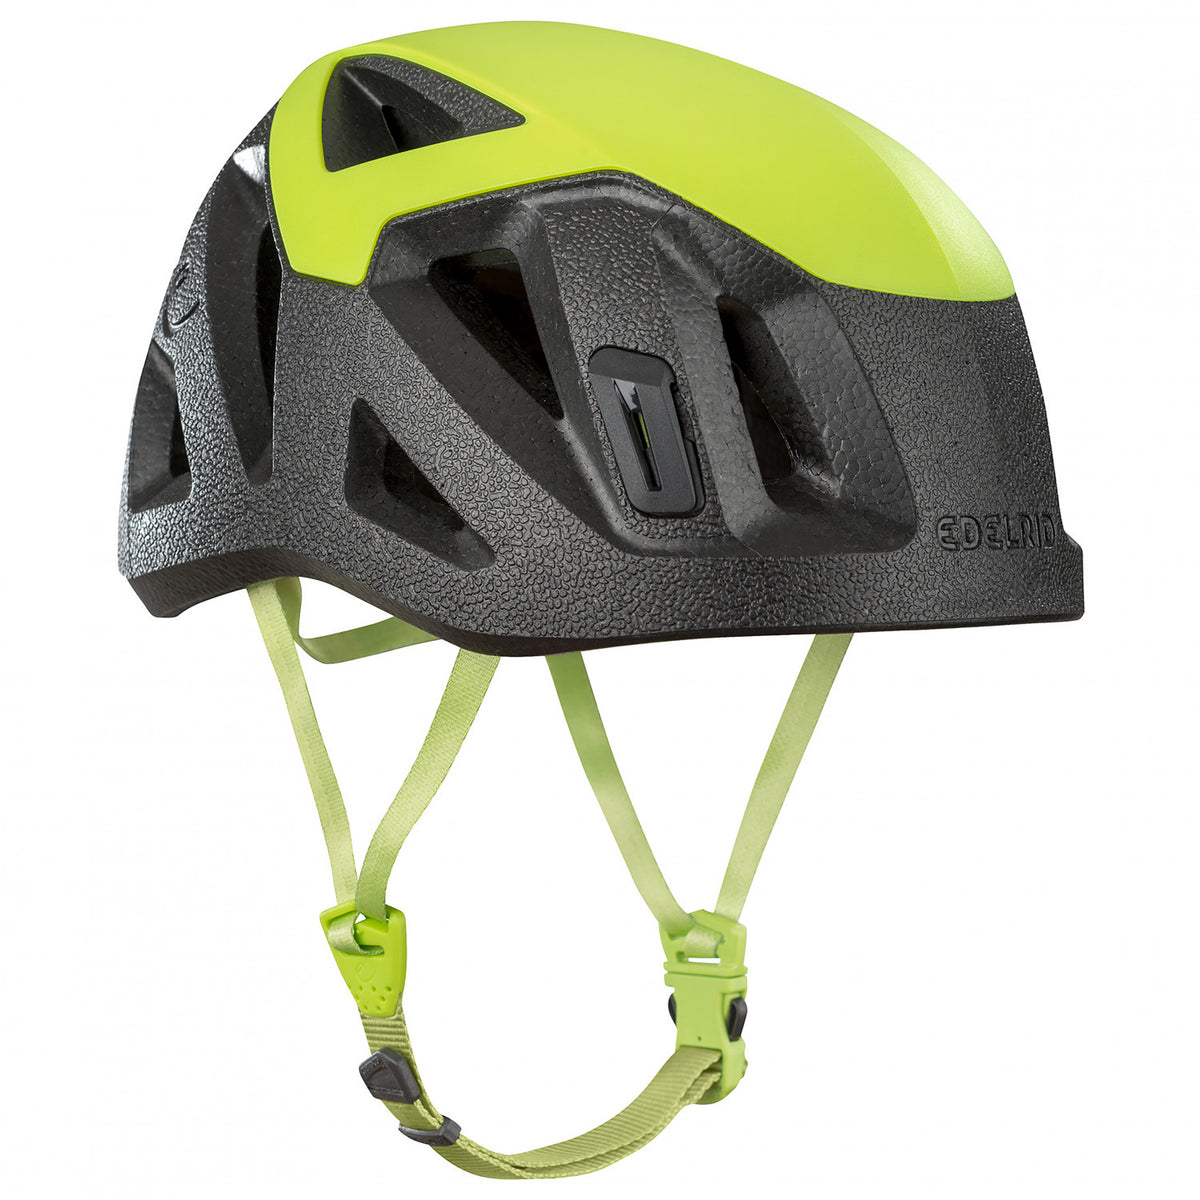 Side of Edelrid Salathe Helmet in Black &amp; Green colours